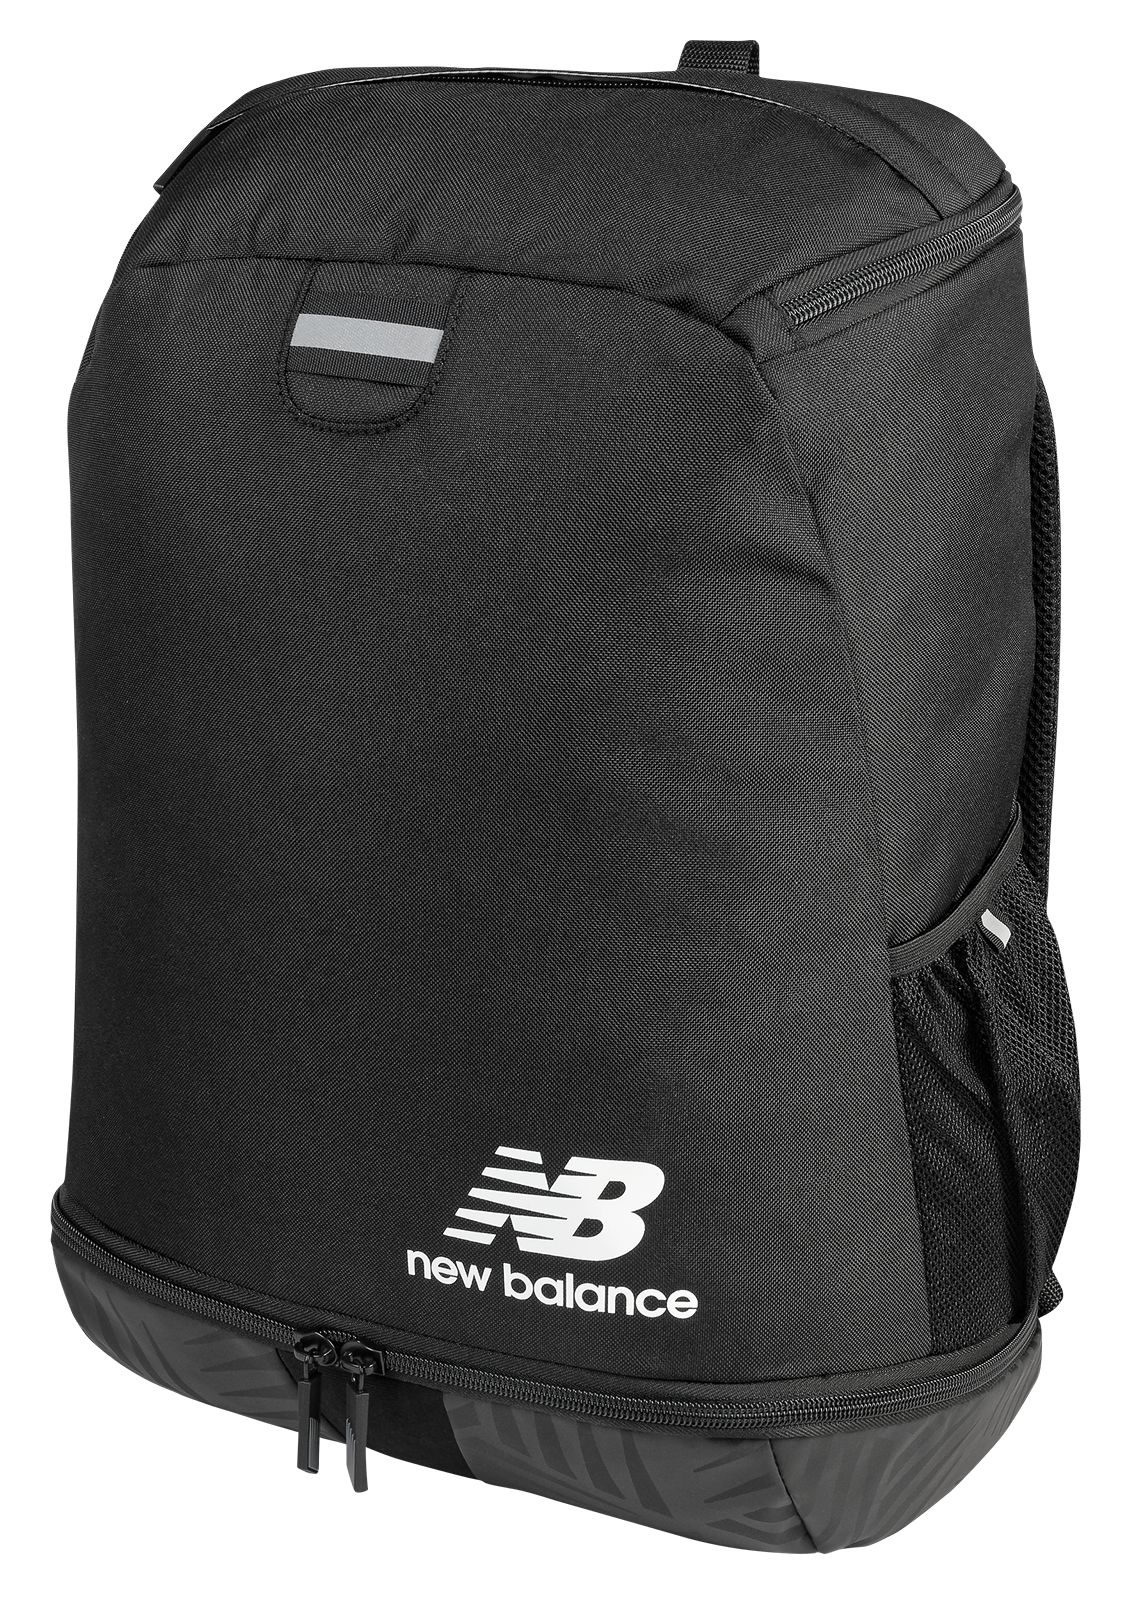 Bags \u0026 Backpacks - New Balance Team Sports